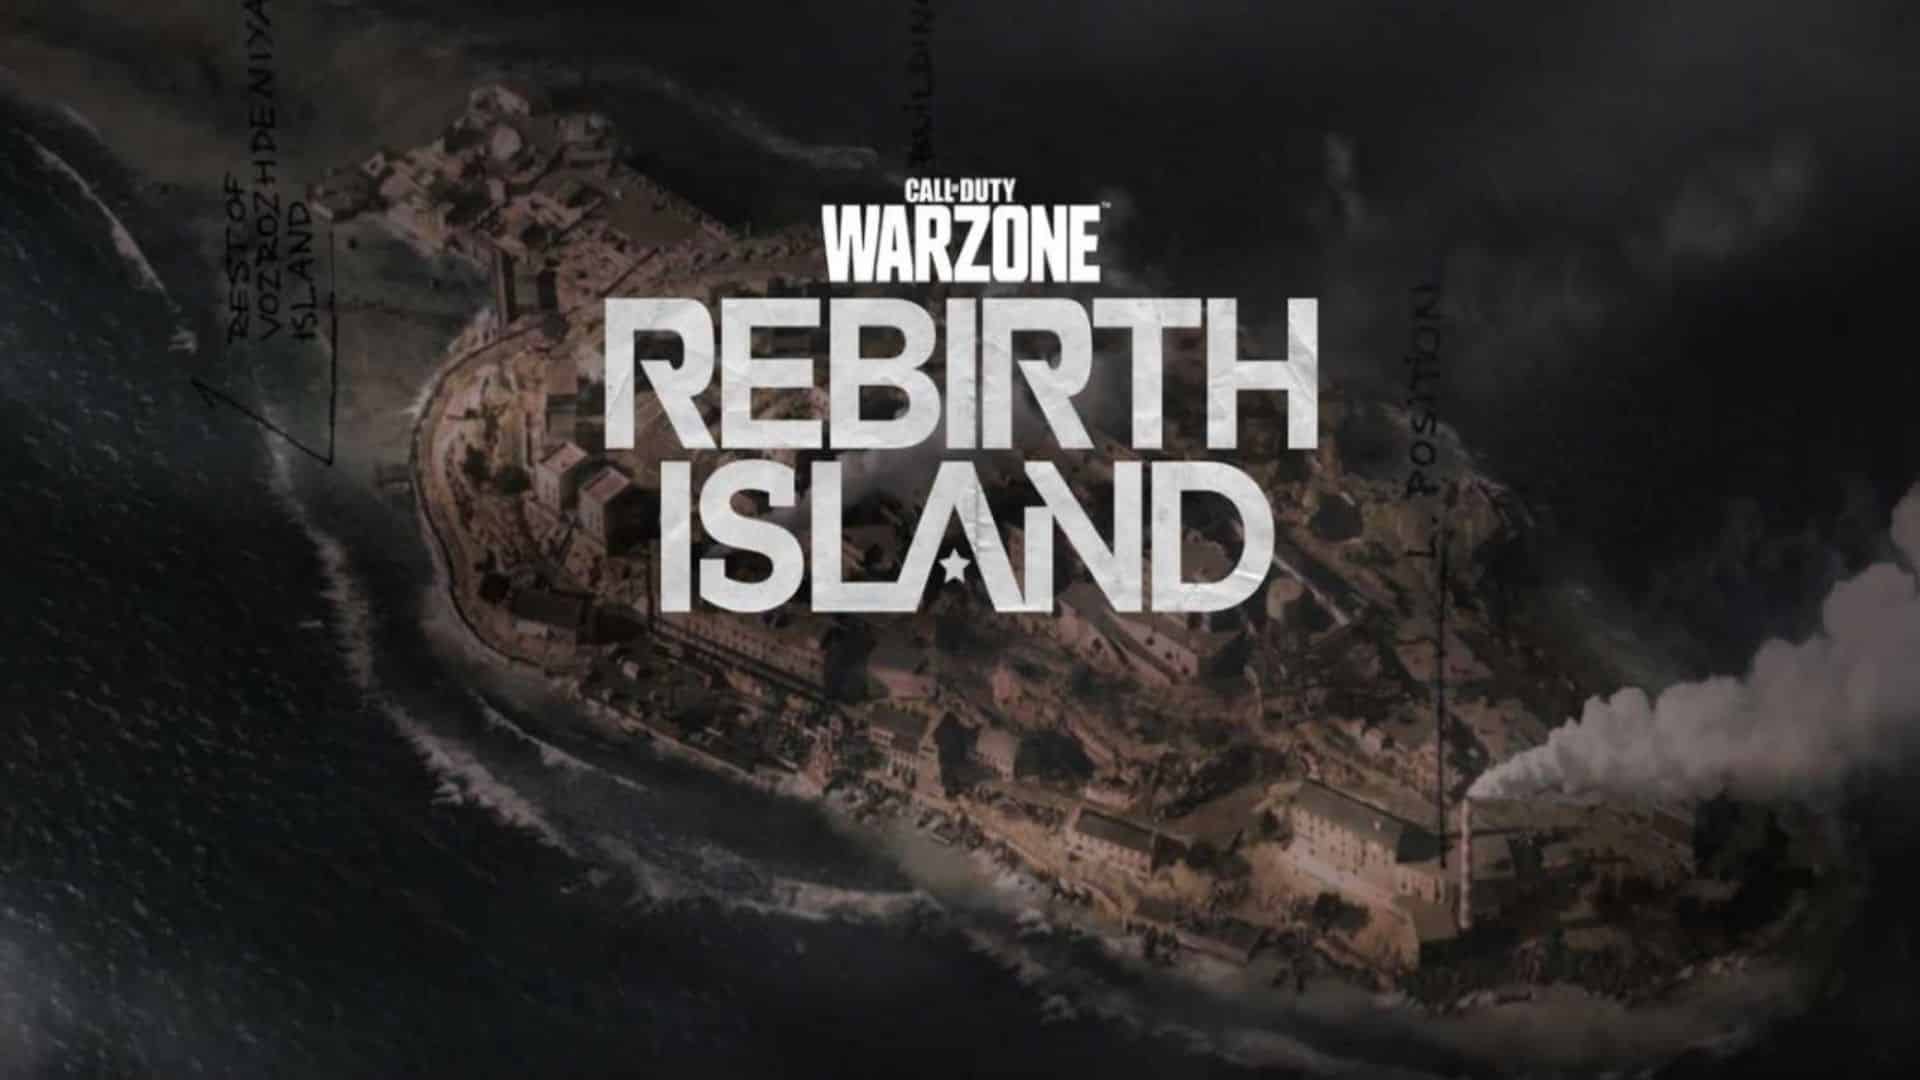 rebirth island in cod warzone